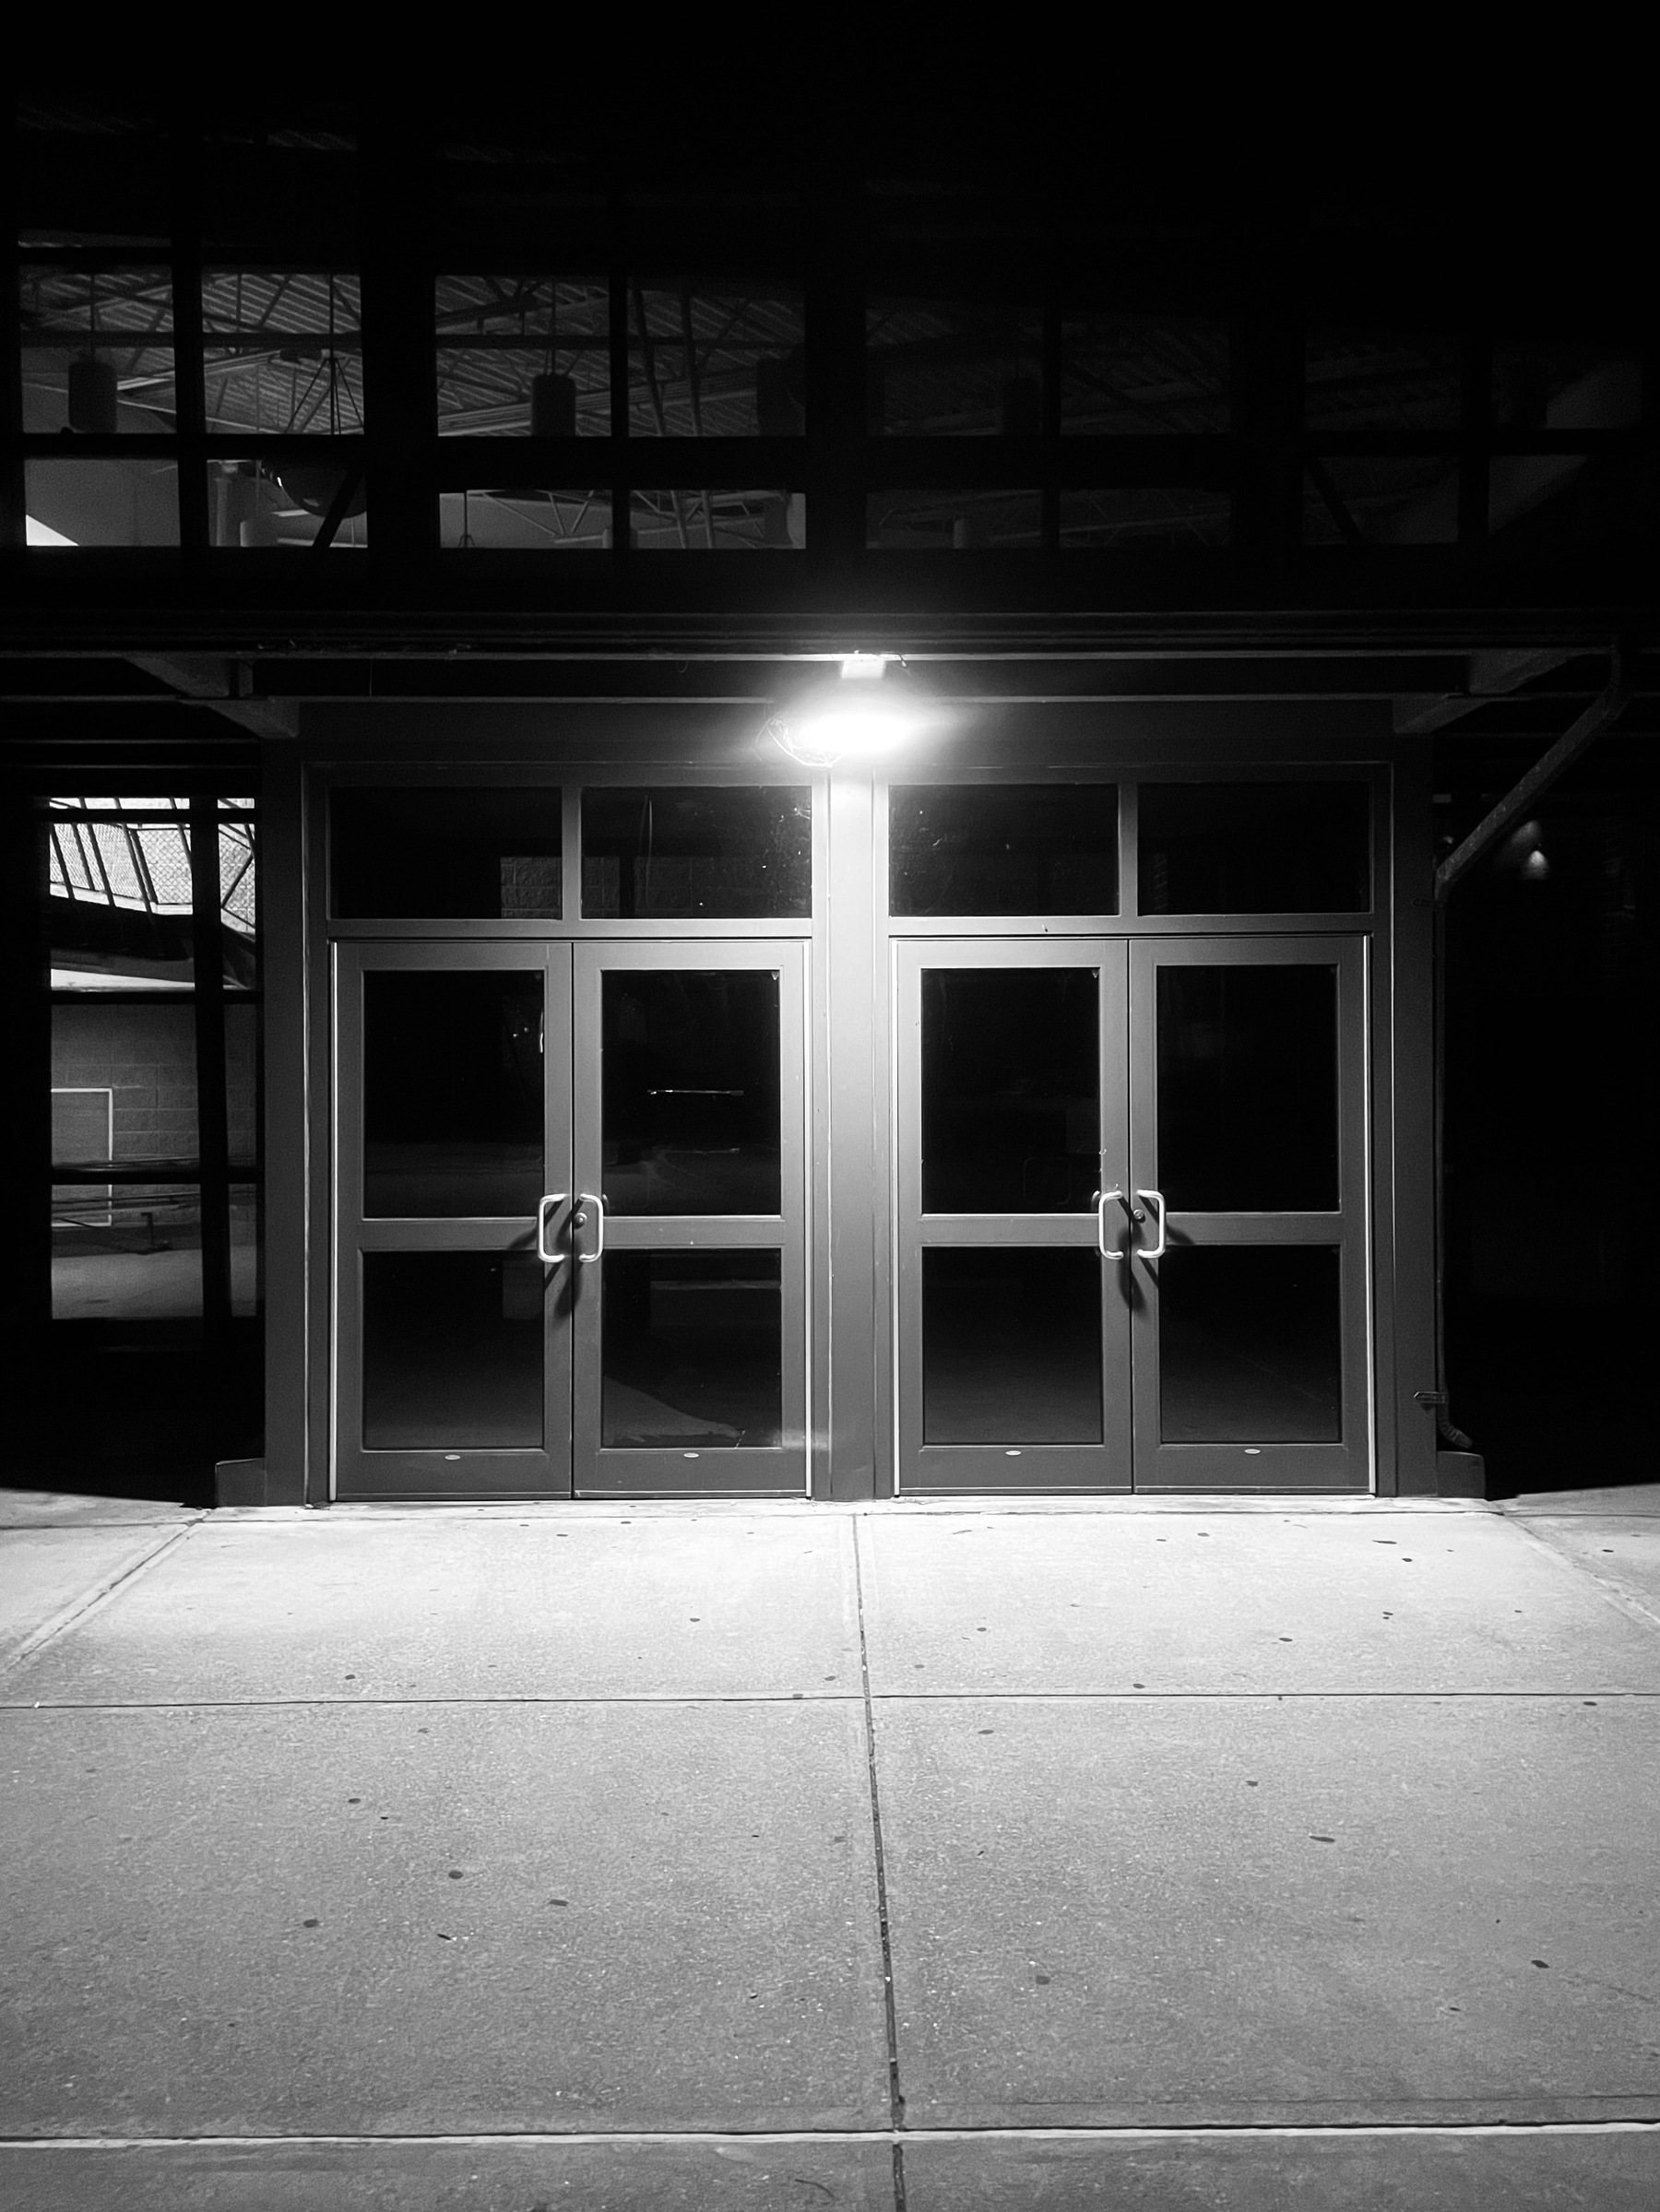 Doors to the middle school, after dark